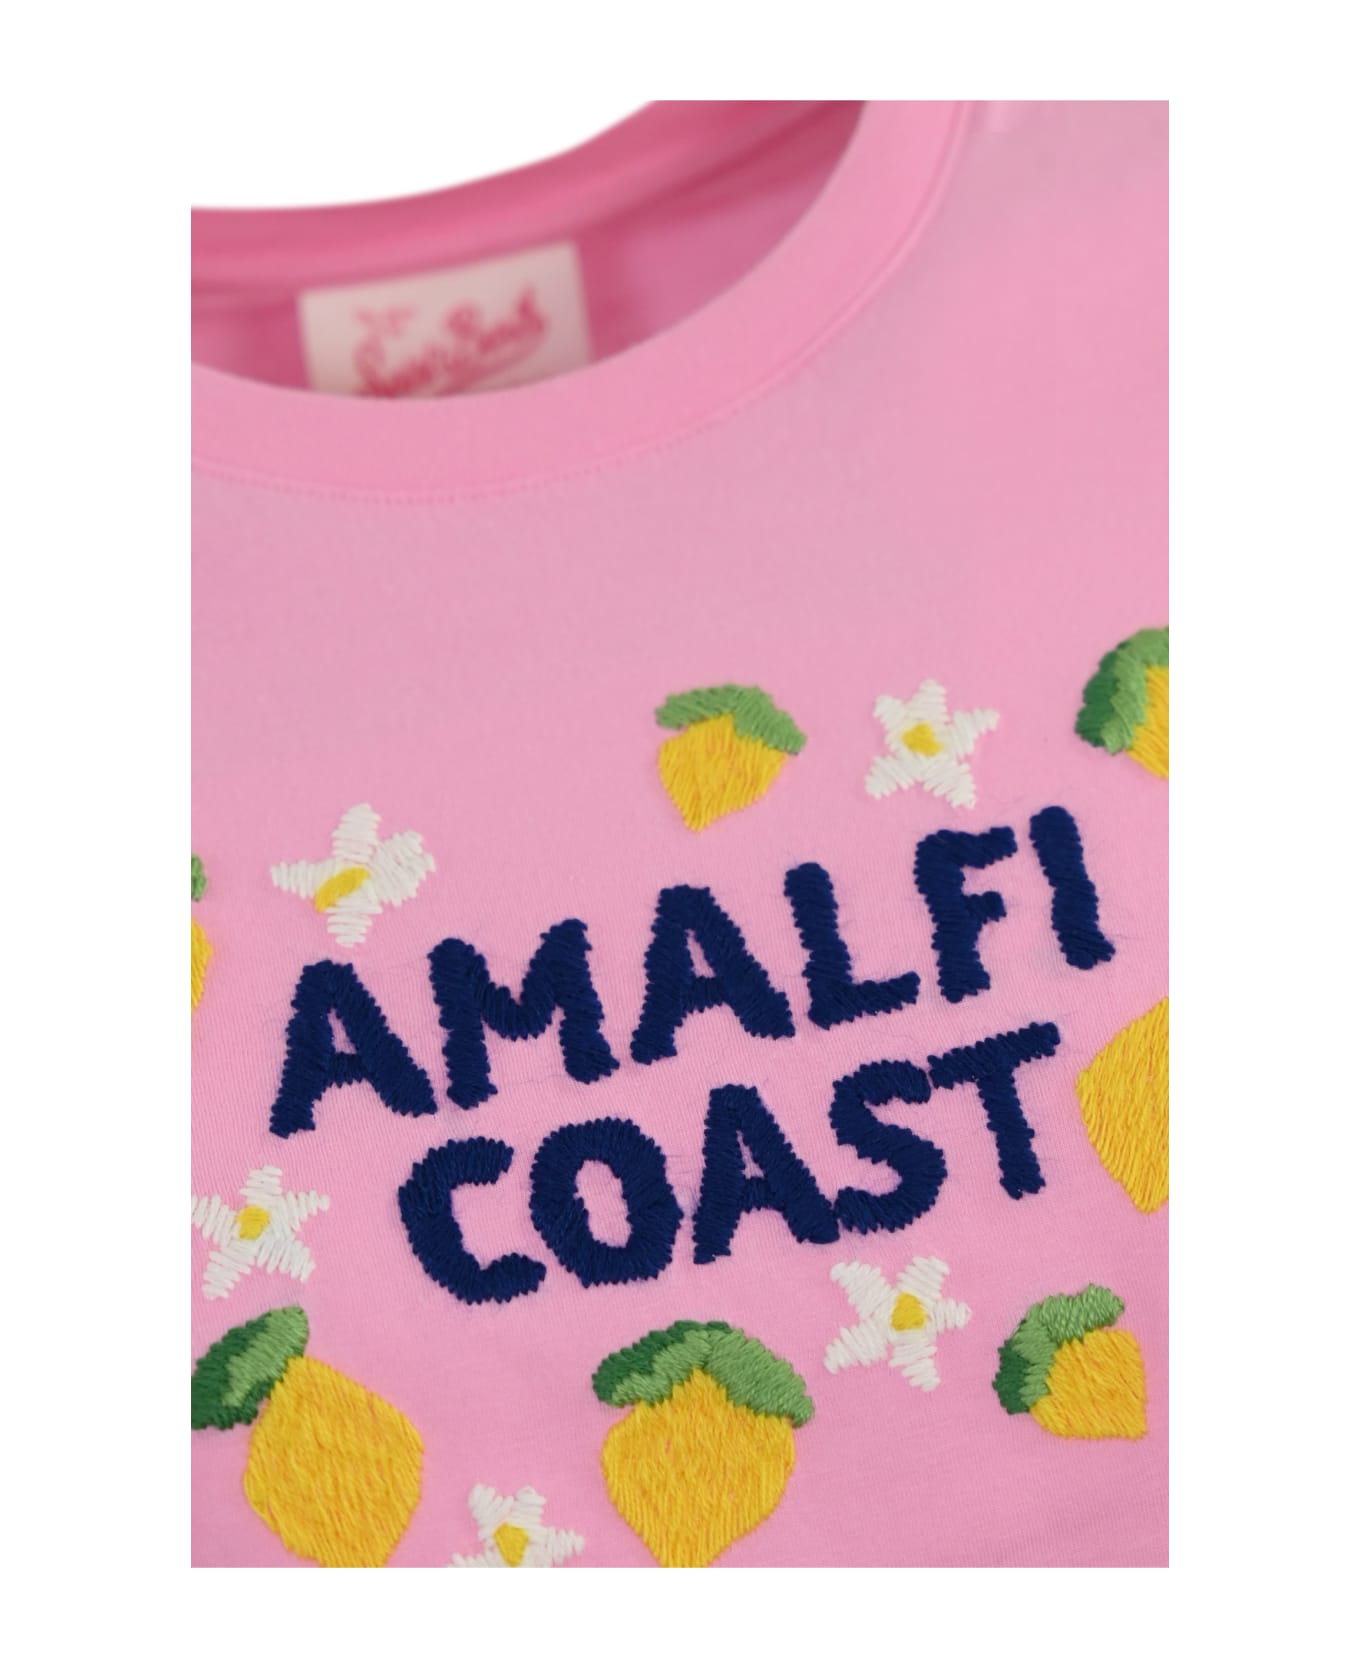 MC2 Saint Barth Emilie T-shirt With Amalfi Coast Embroidery - Rosa